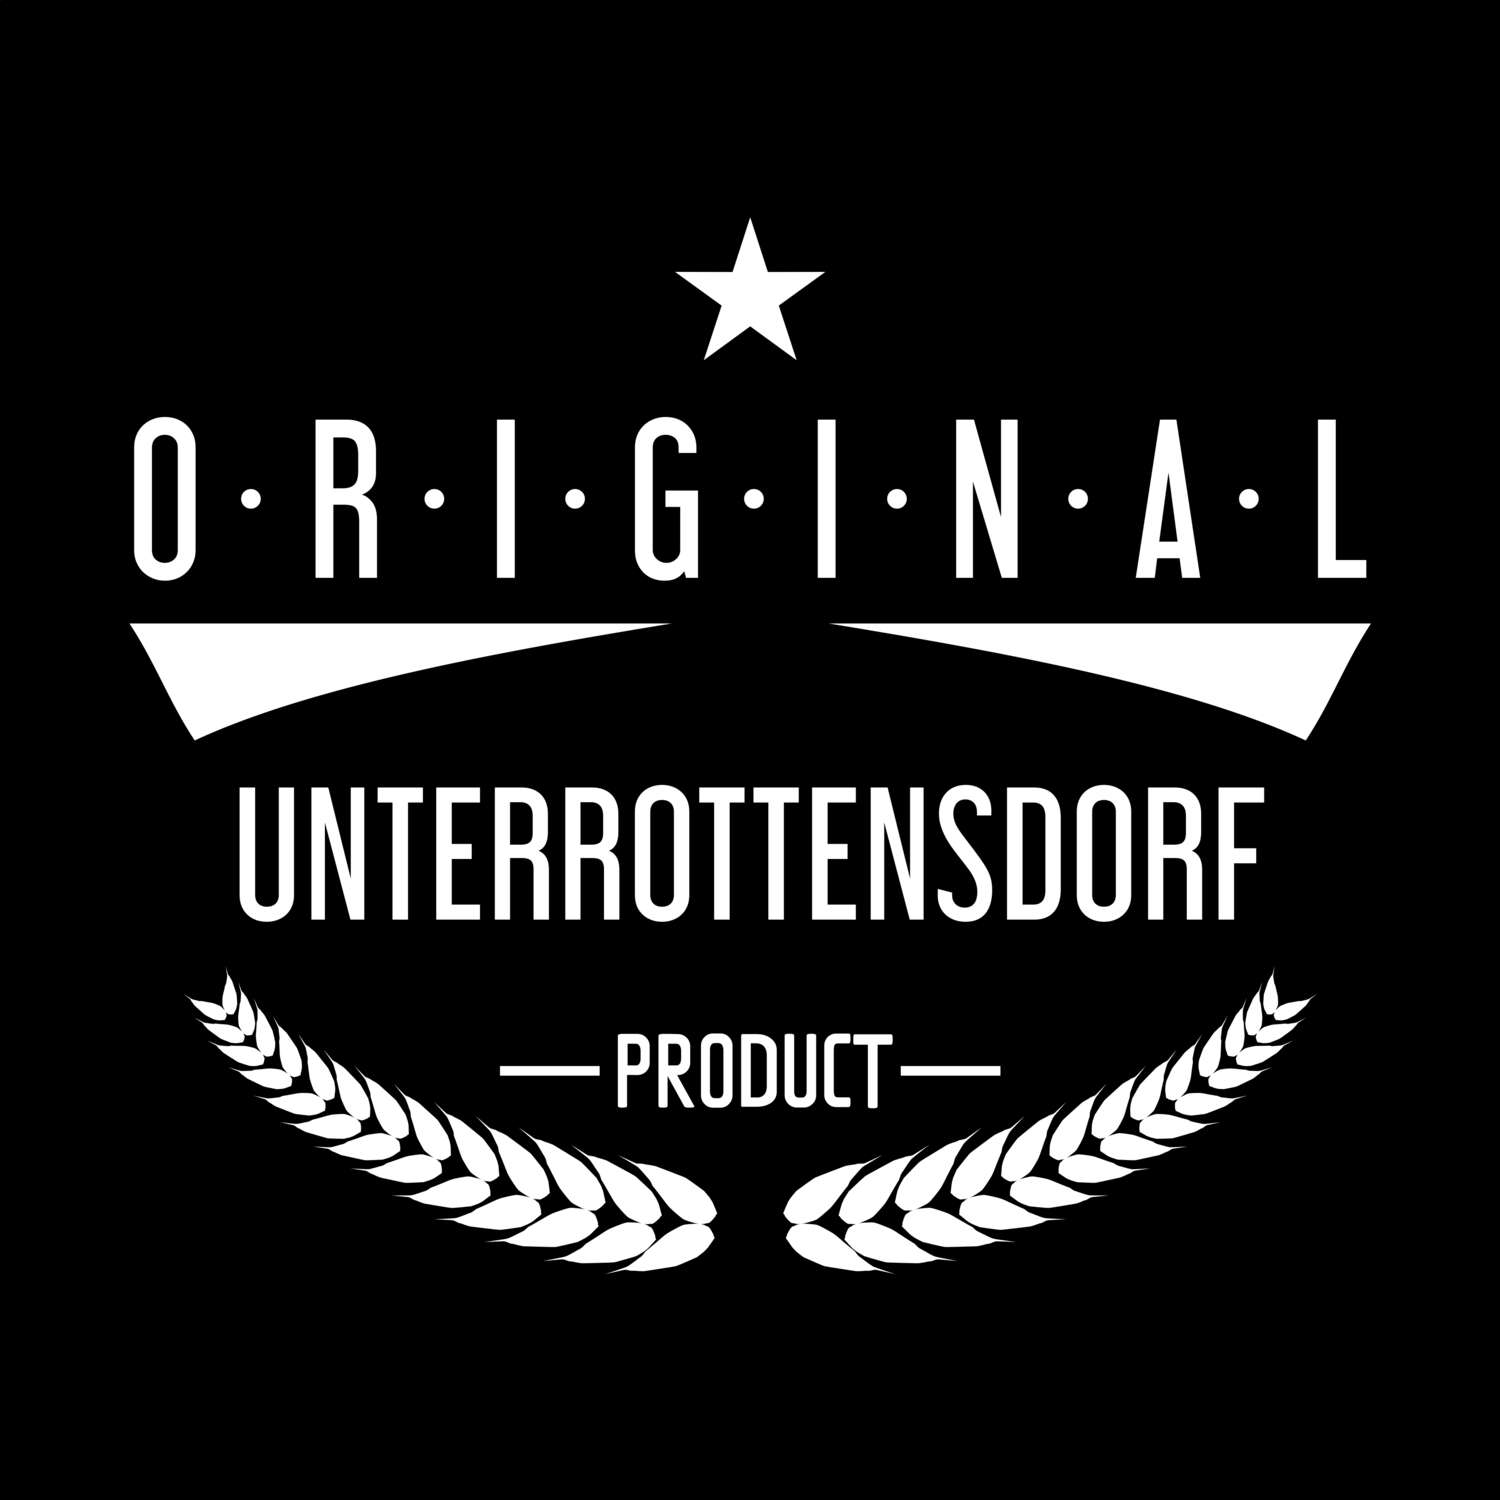 Unterrottensdorf T-Shirt »Original Product«